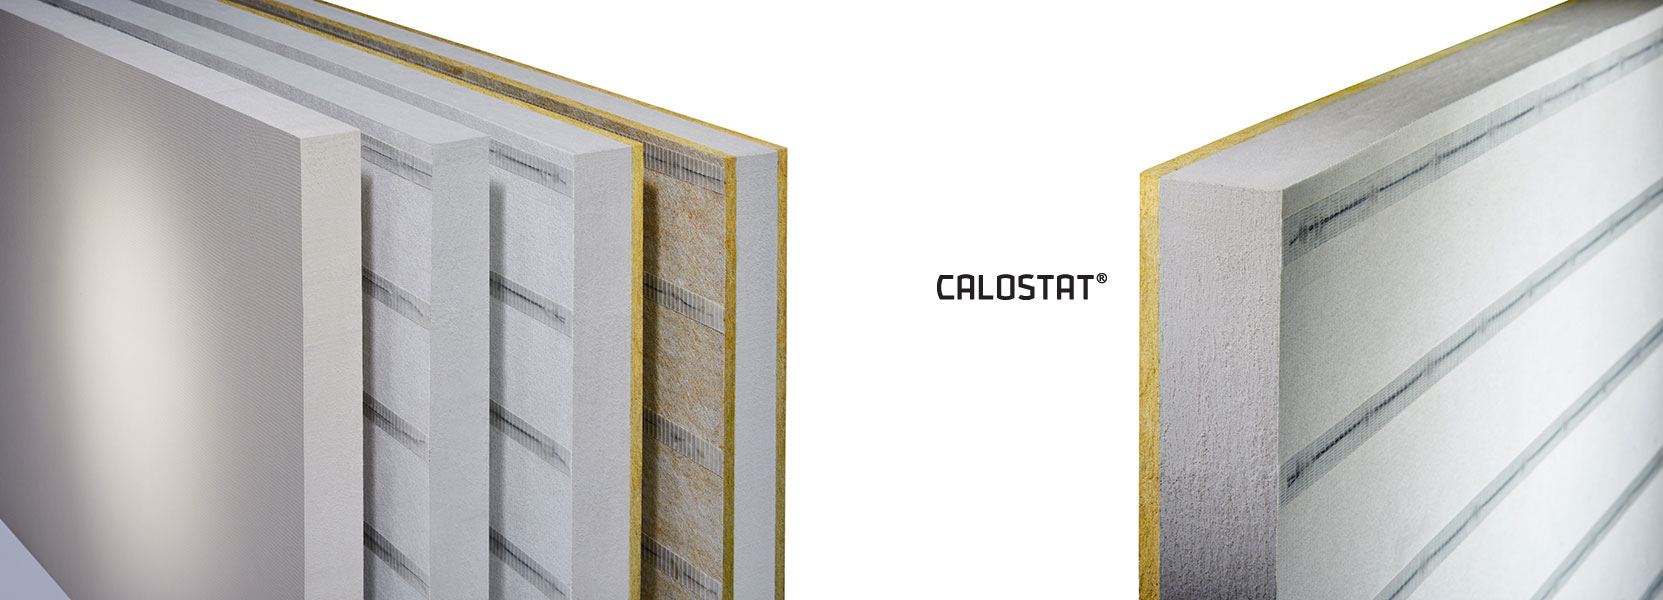 CALOSTAT® Insulation Panel Range and CALOSTAT® Sandwich MW/F